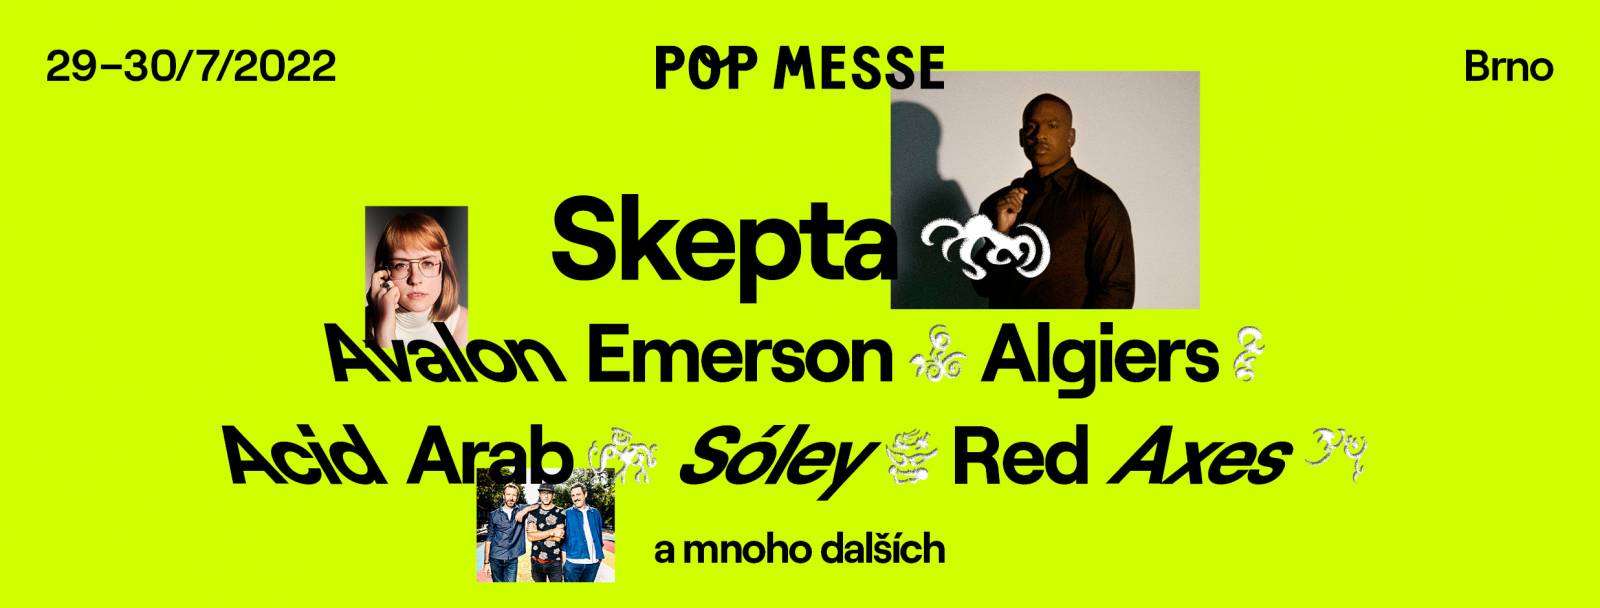 Festival Pop Messe přiveze do Brna Skeptu, Algiers, Sóley, Acid Arab nebo Avalon Emerson 